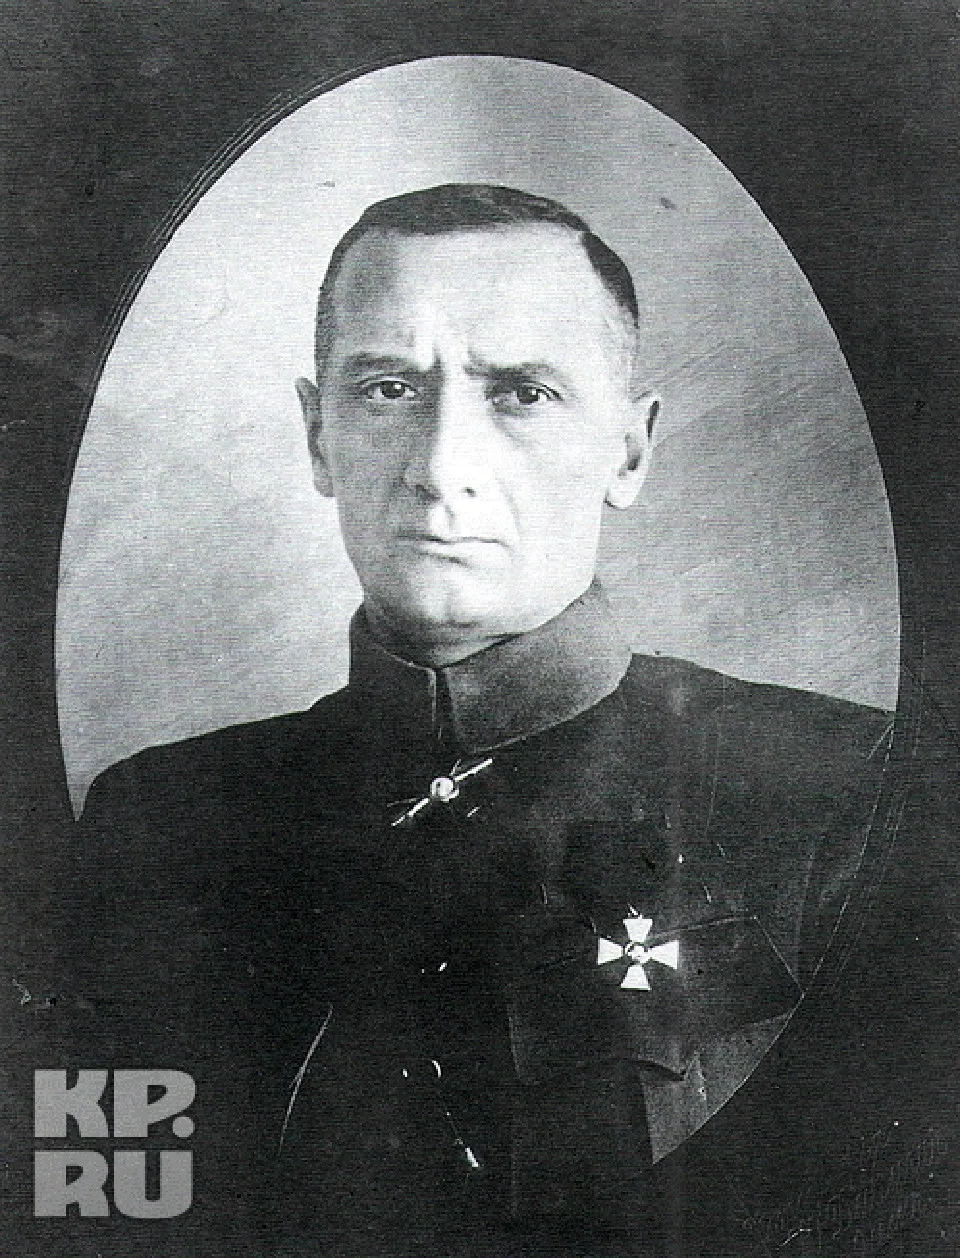 Адмирал Колчак